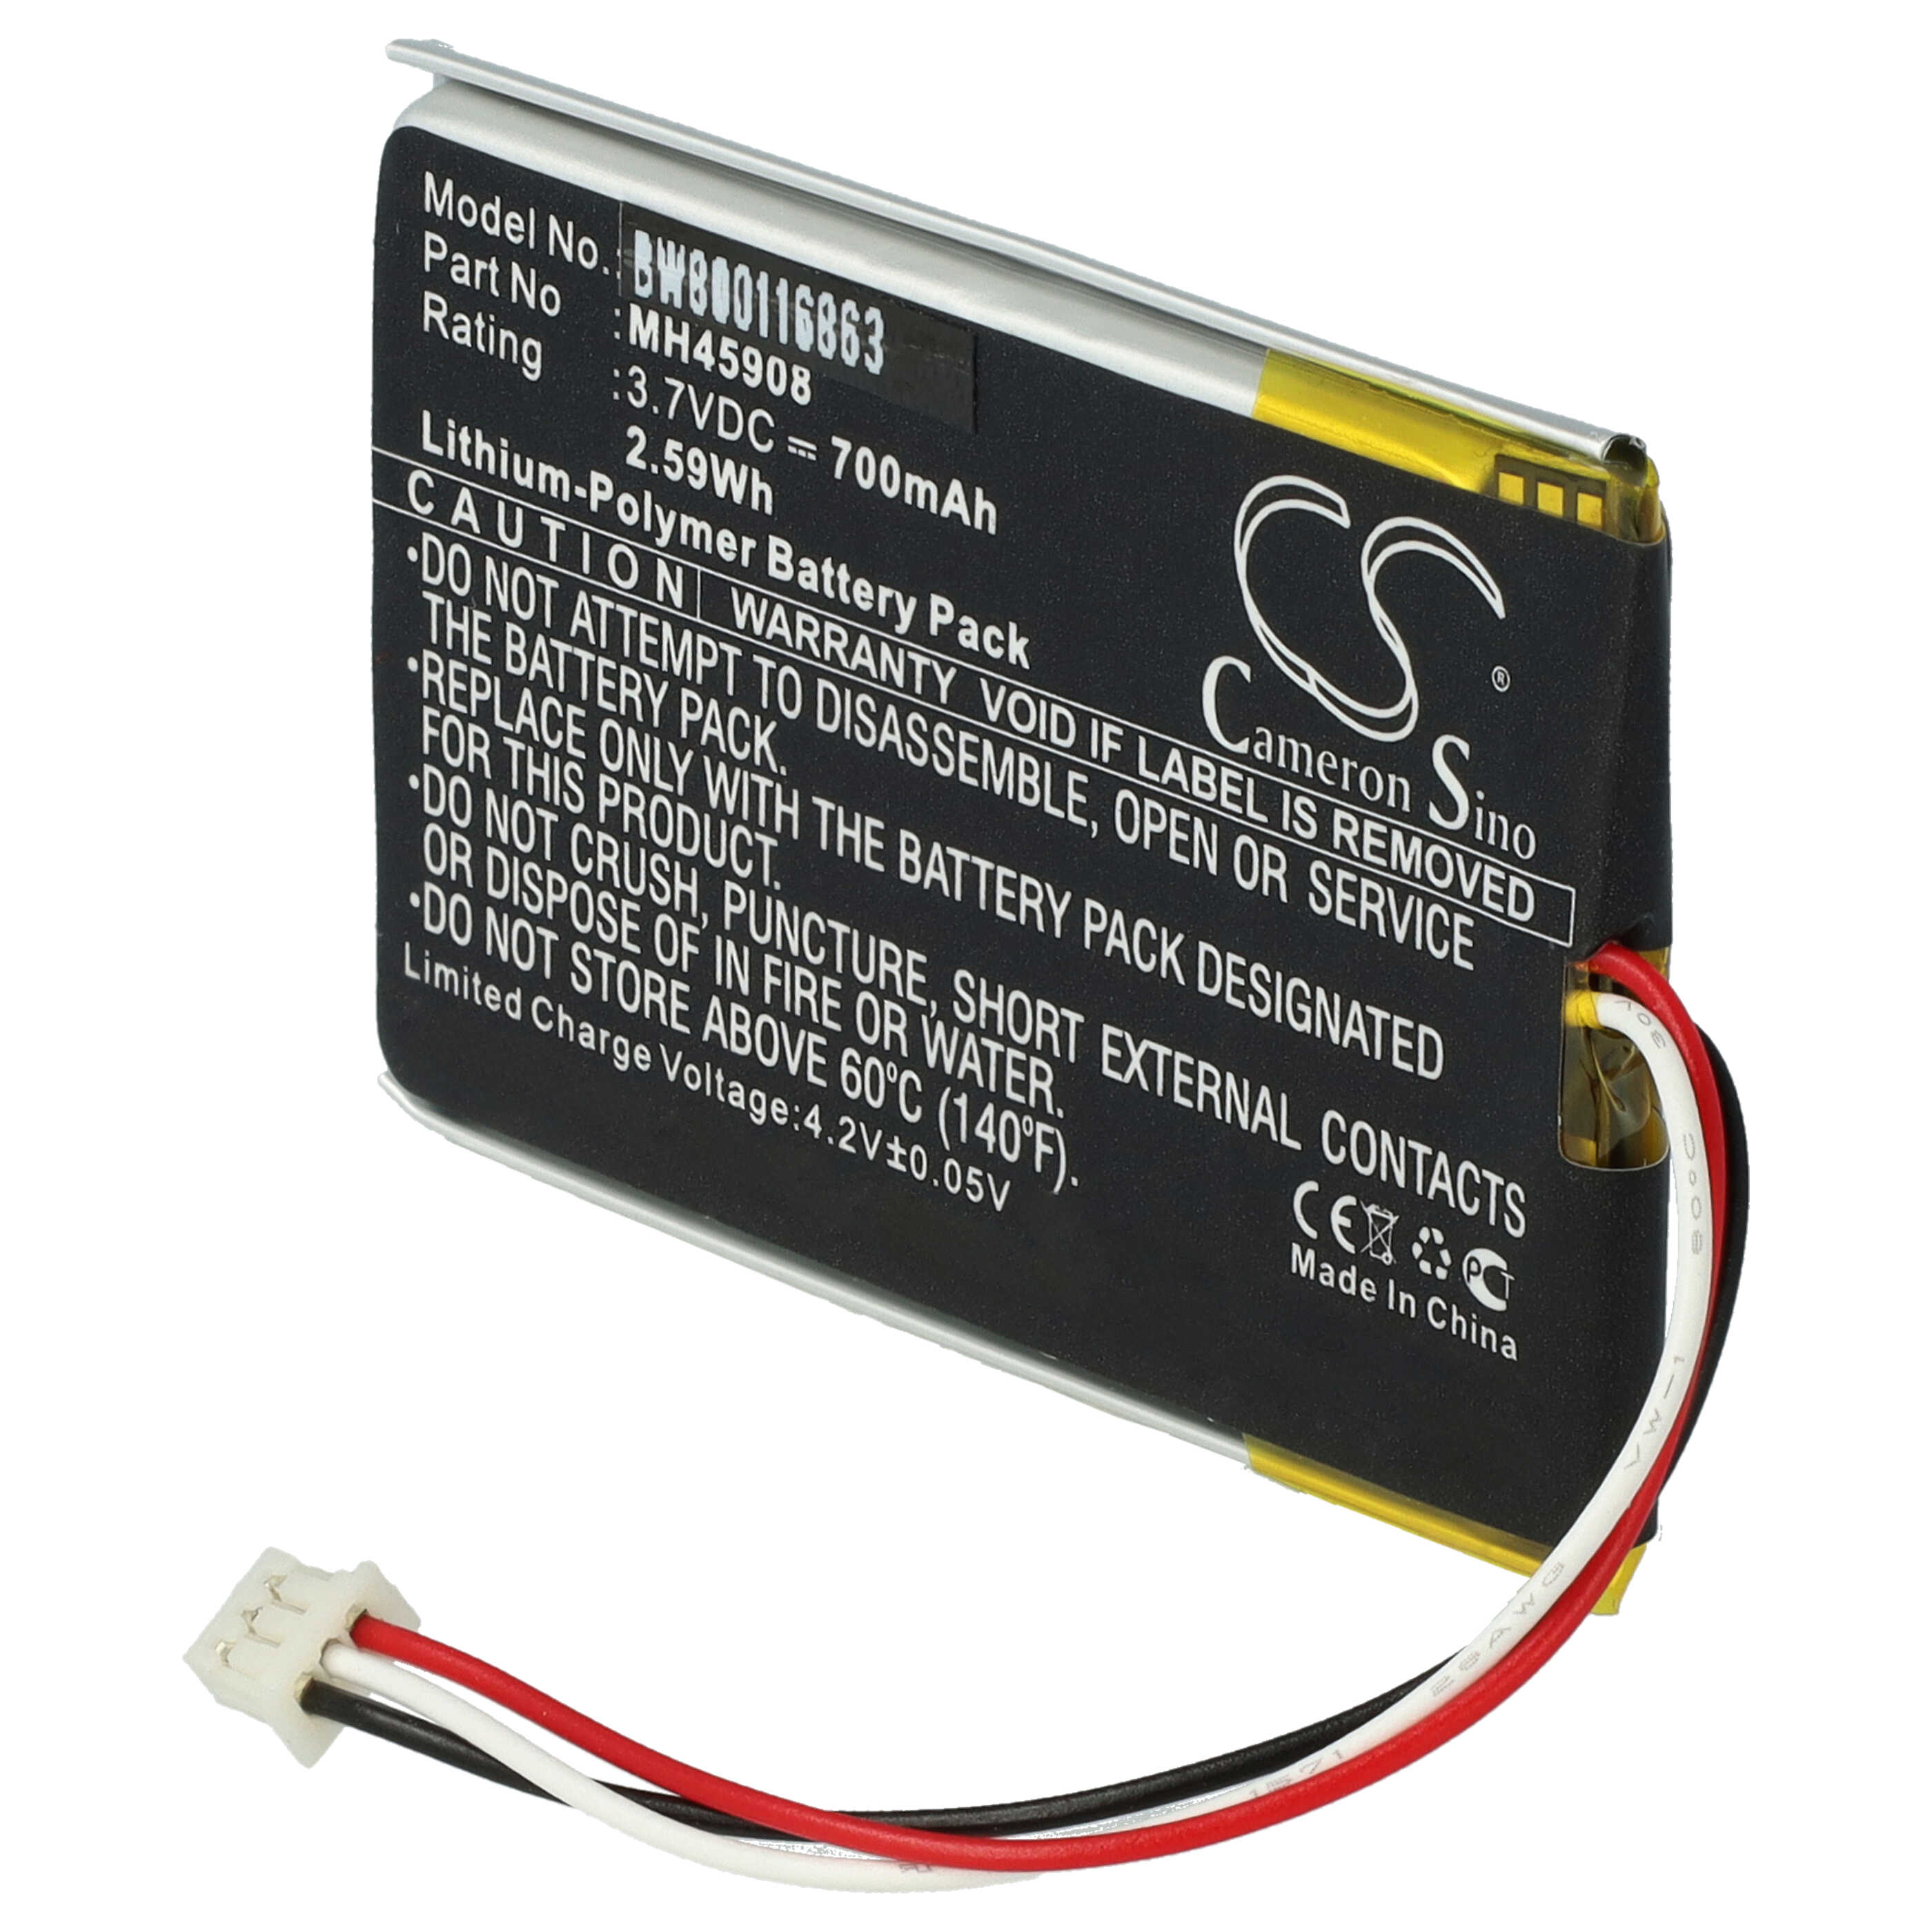 Batteria per auricolari cuffie wireless sostituisce Corsair MH45908 Corsair - 700mAh 3,7V Li-Poly